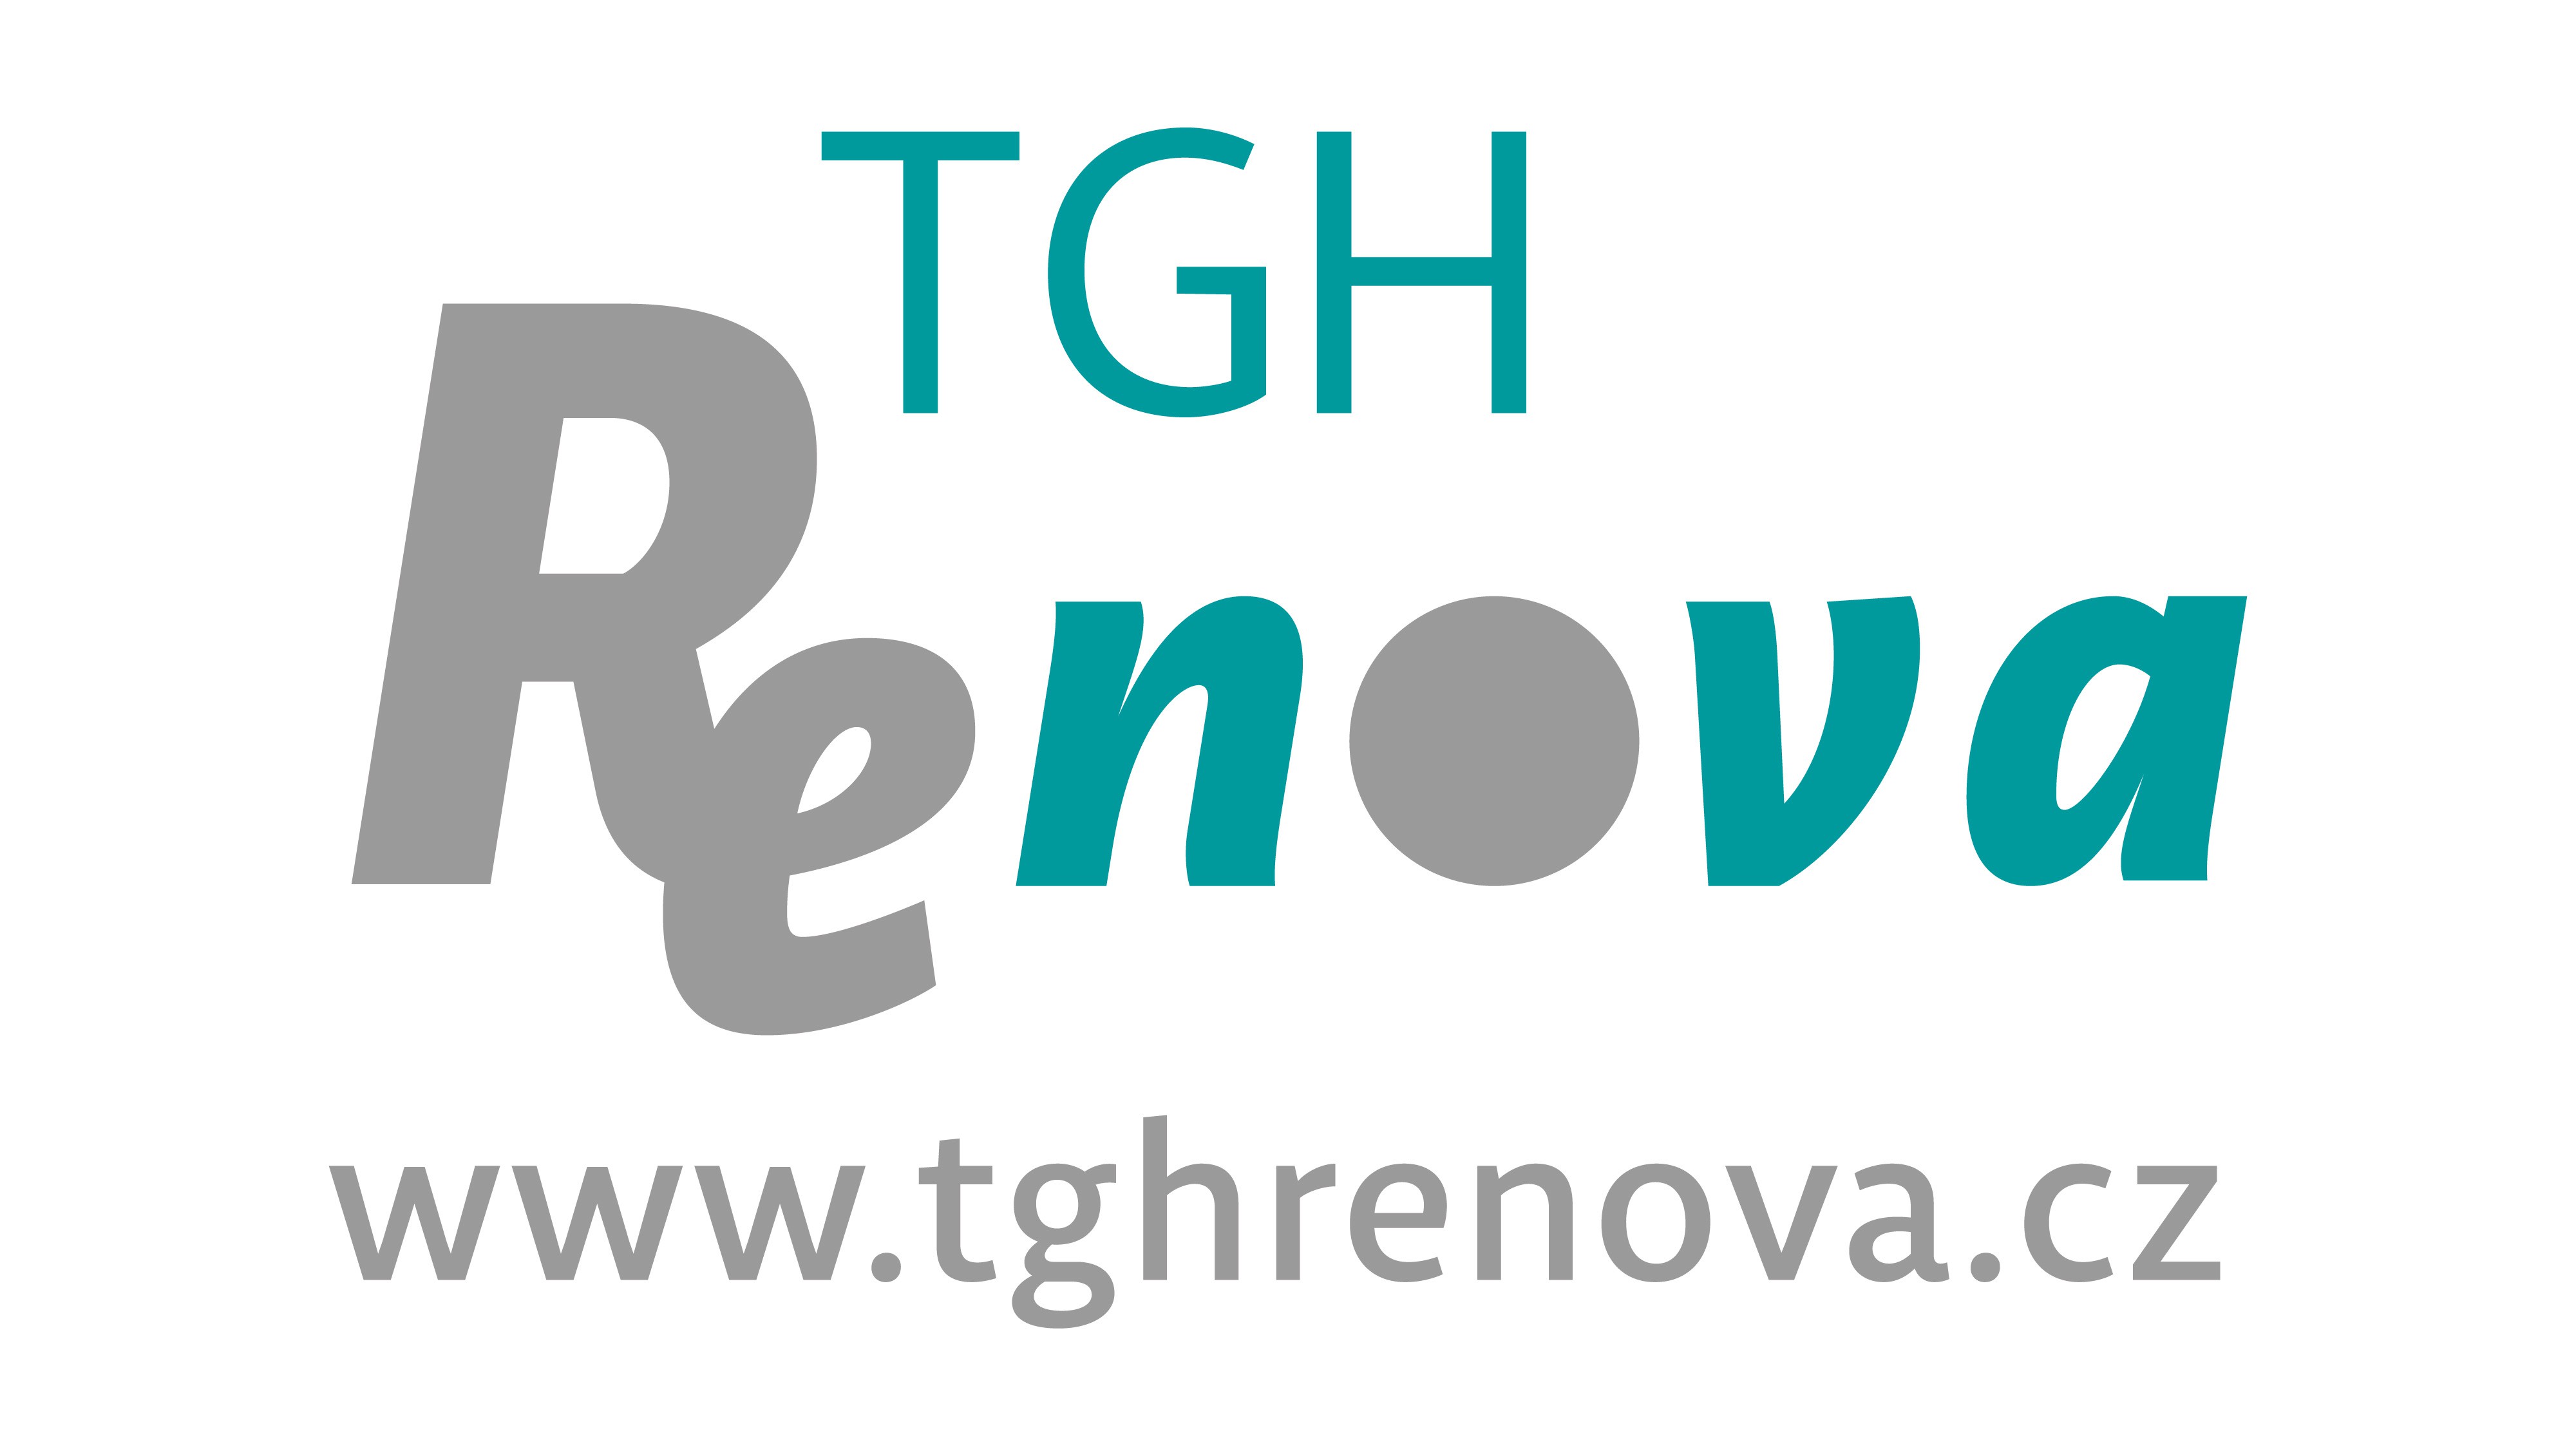 tghrenova_logo_rgb-02.jpg